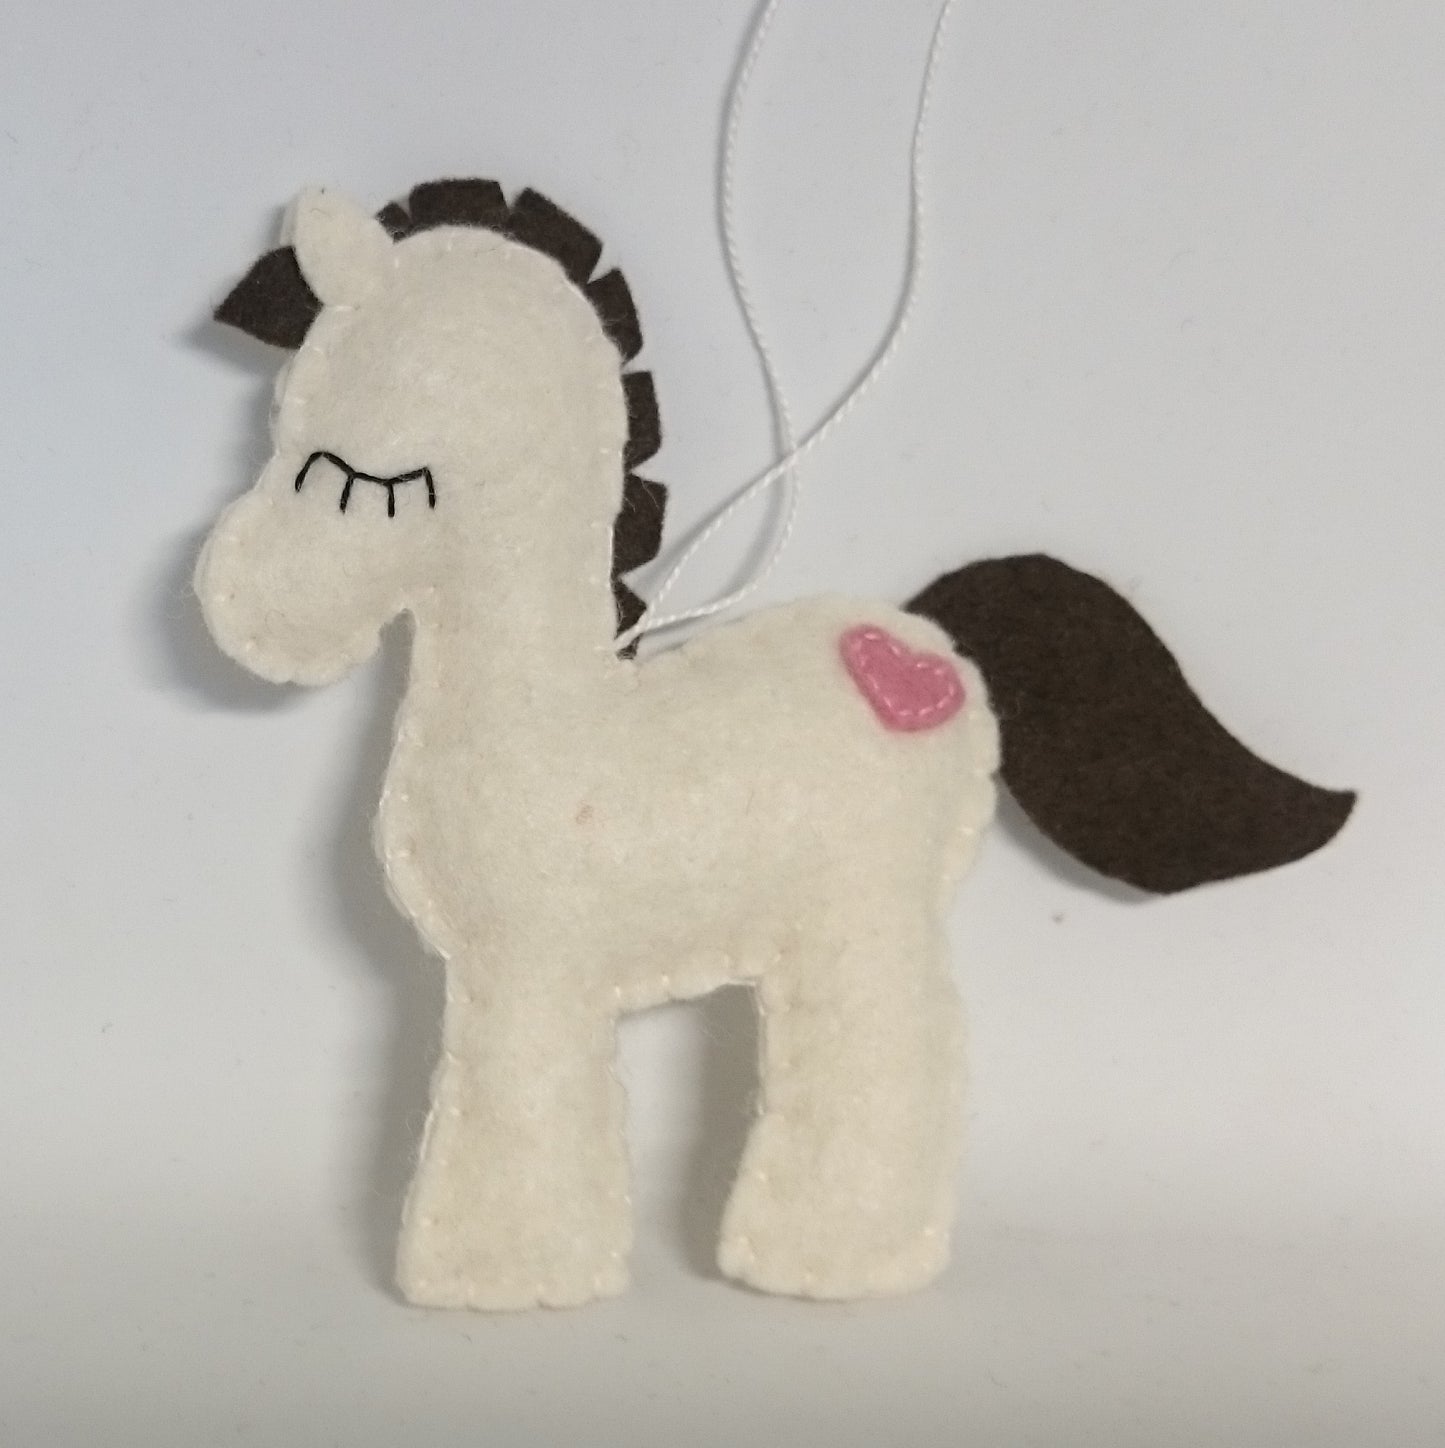 Felt pony decoration - horse ornaments